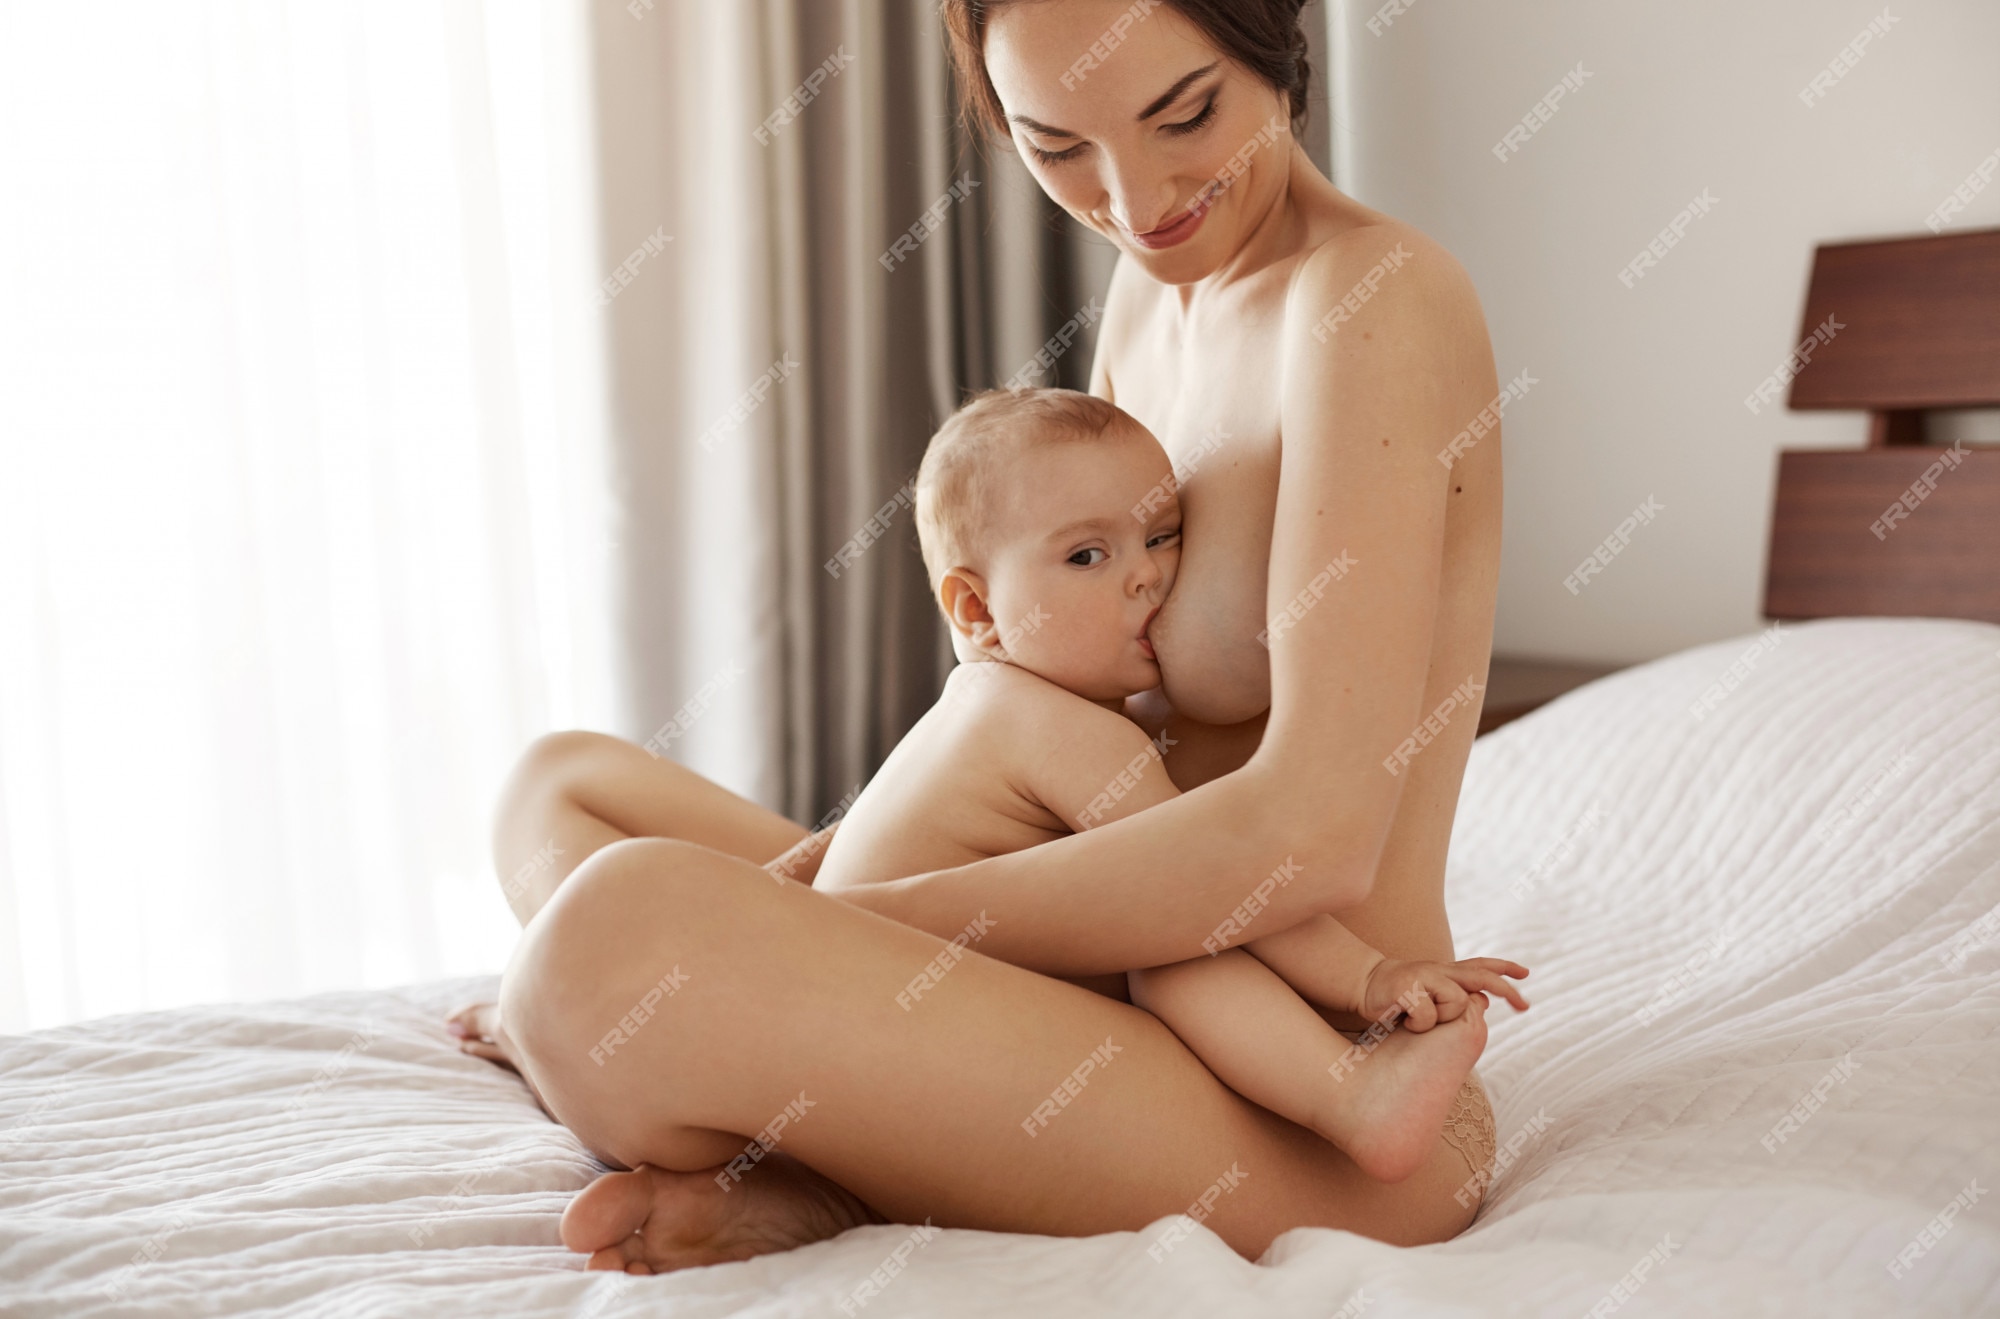 ashley rauch share son gives mom massage photos